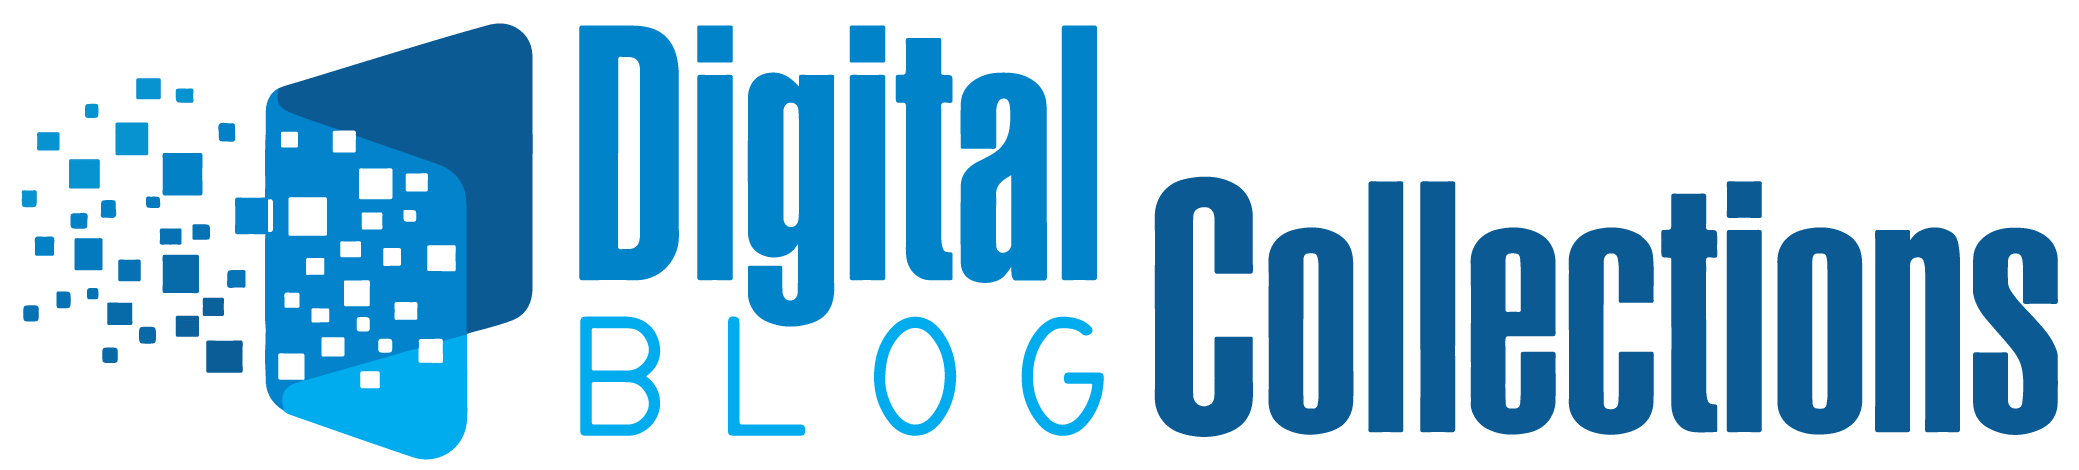 Digital Collections Blog Logo